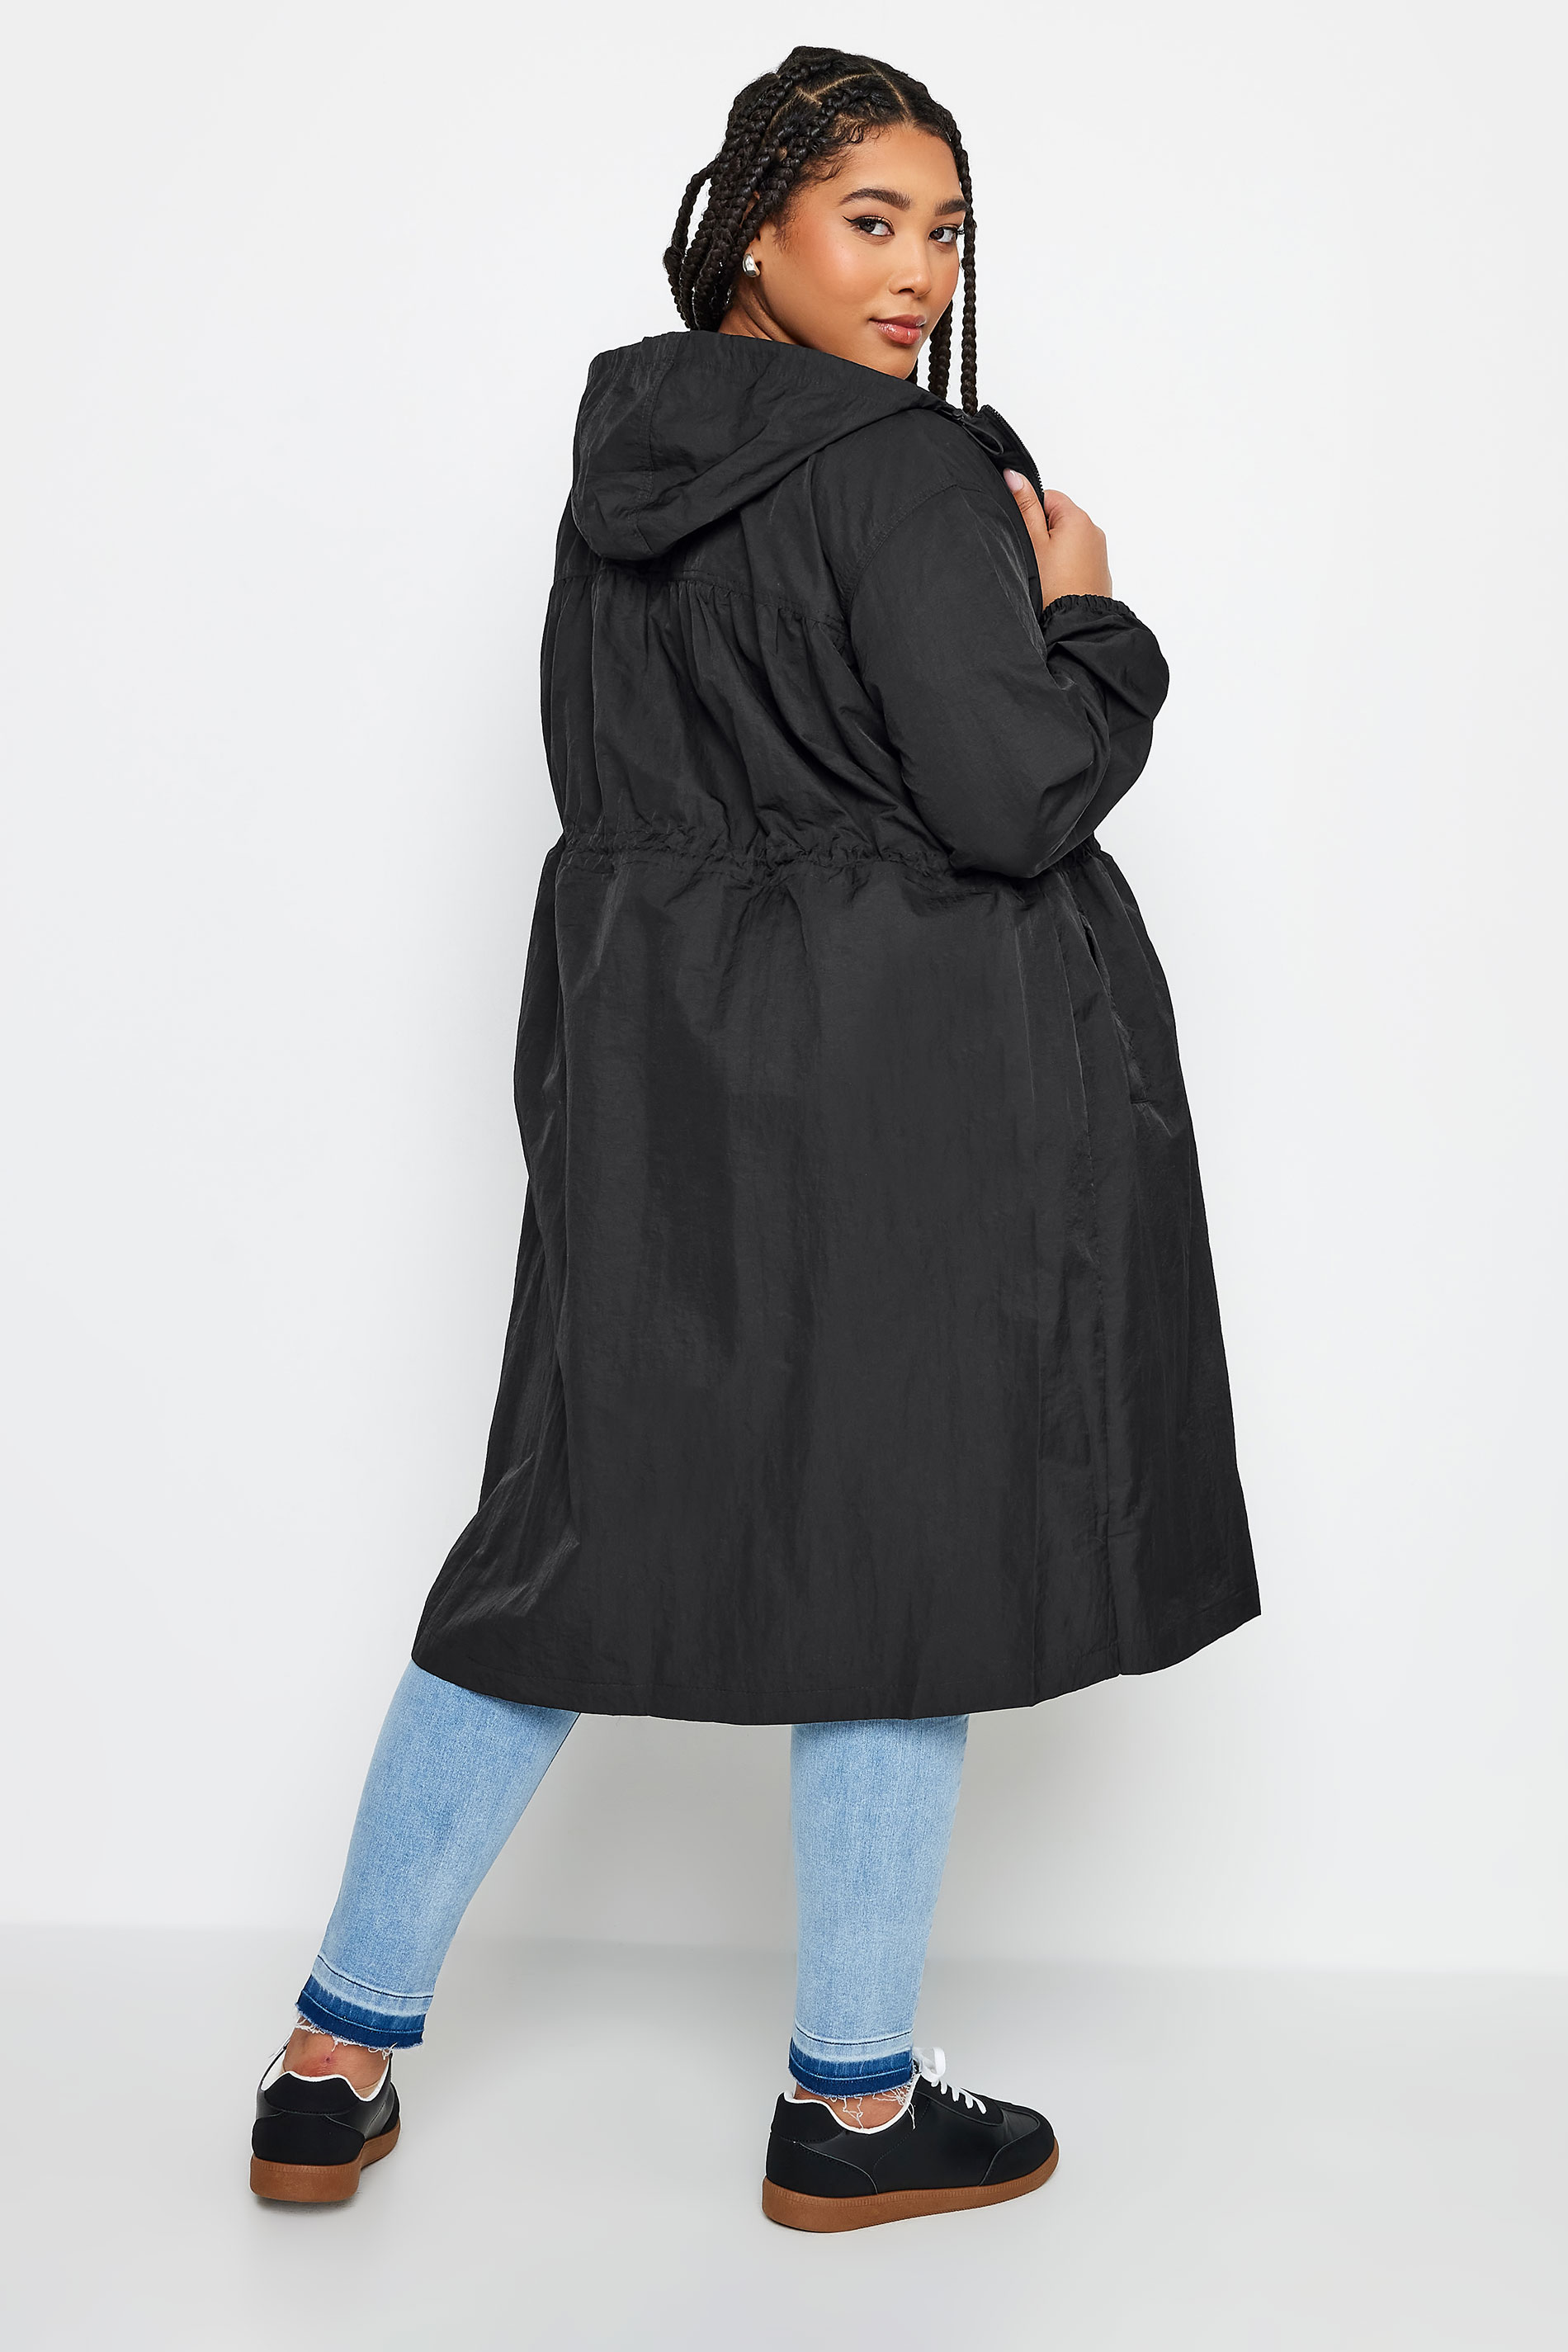 YOURS Plus Size Black Lightweight Longline Parka Jacket | Yours Clothing 3